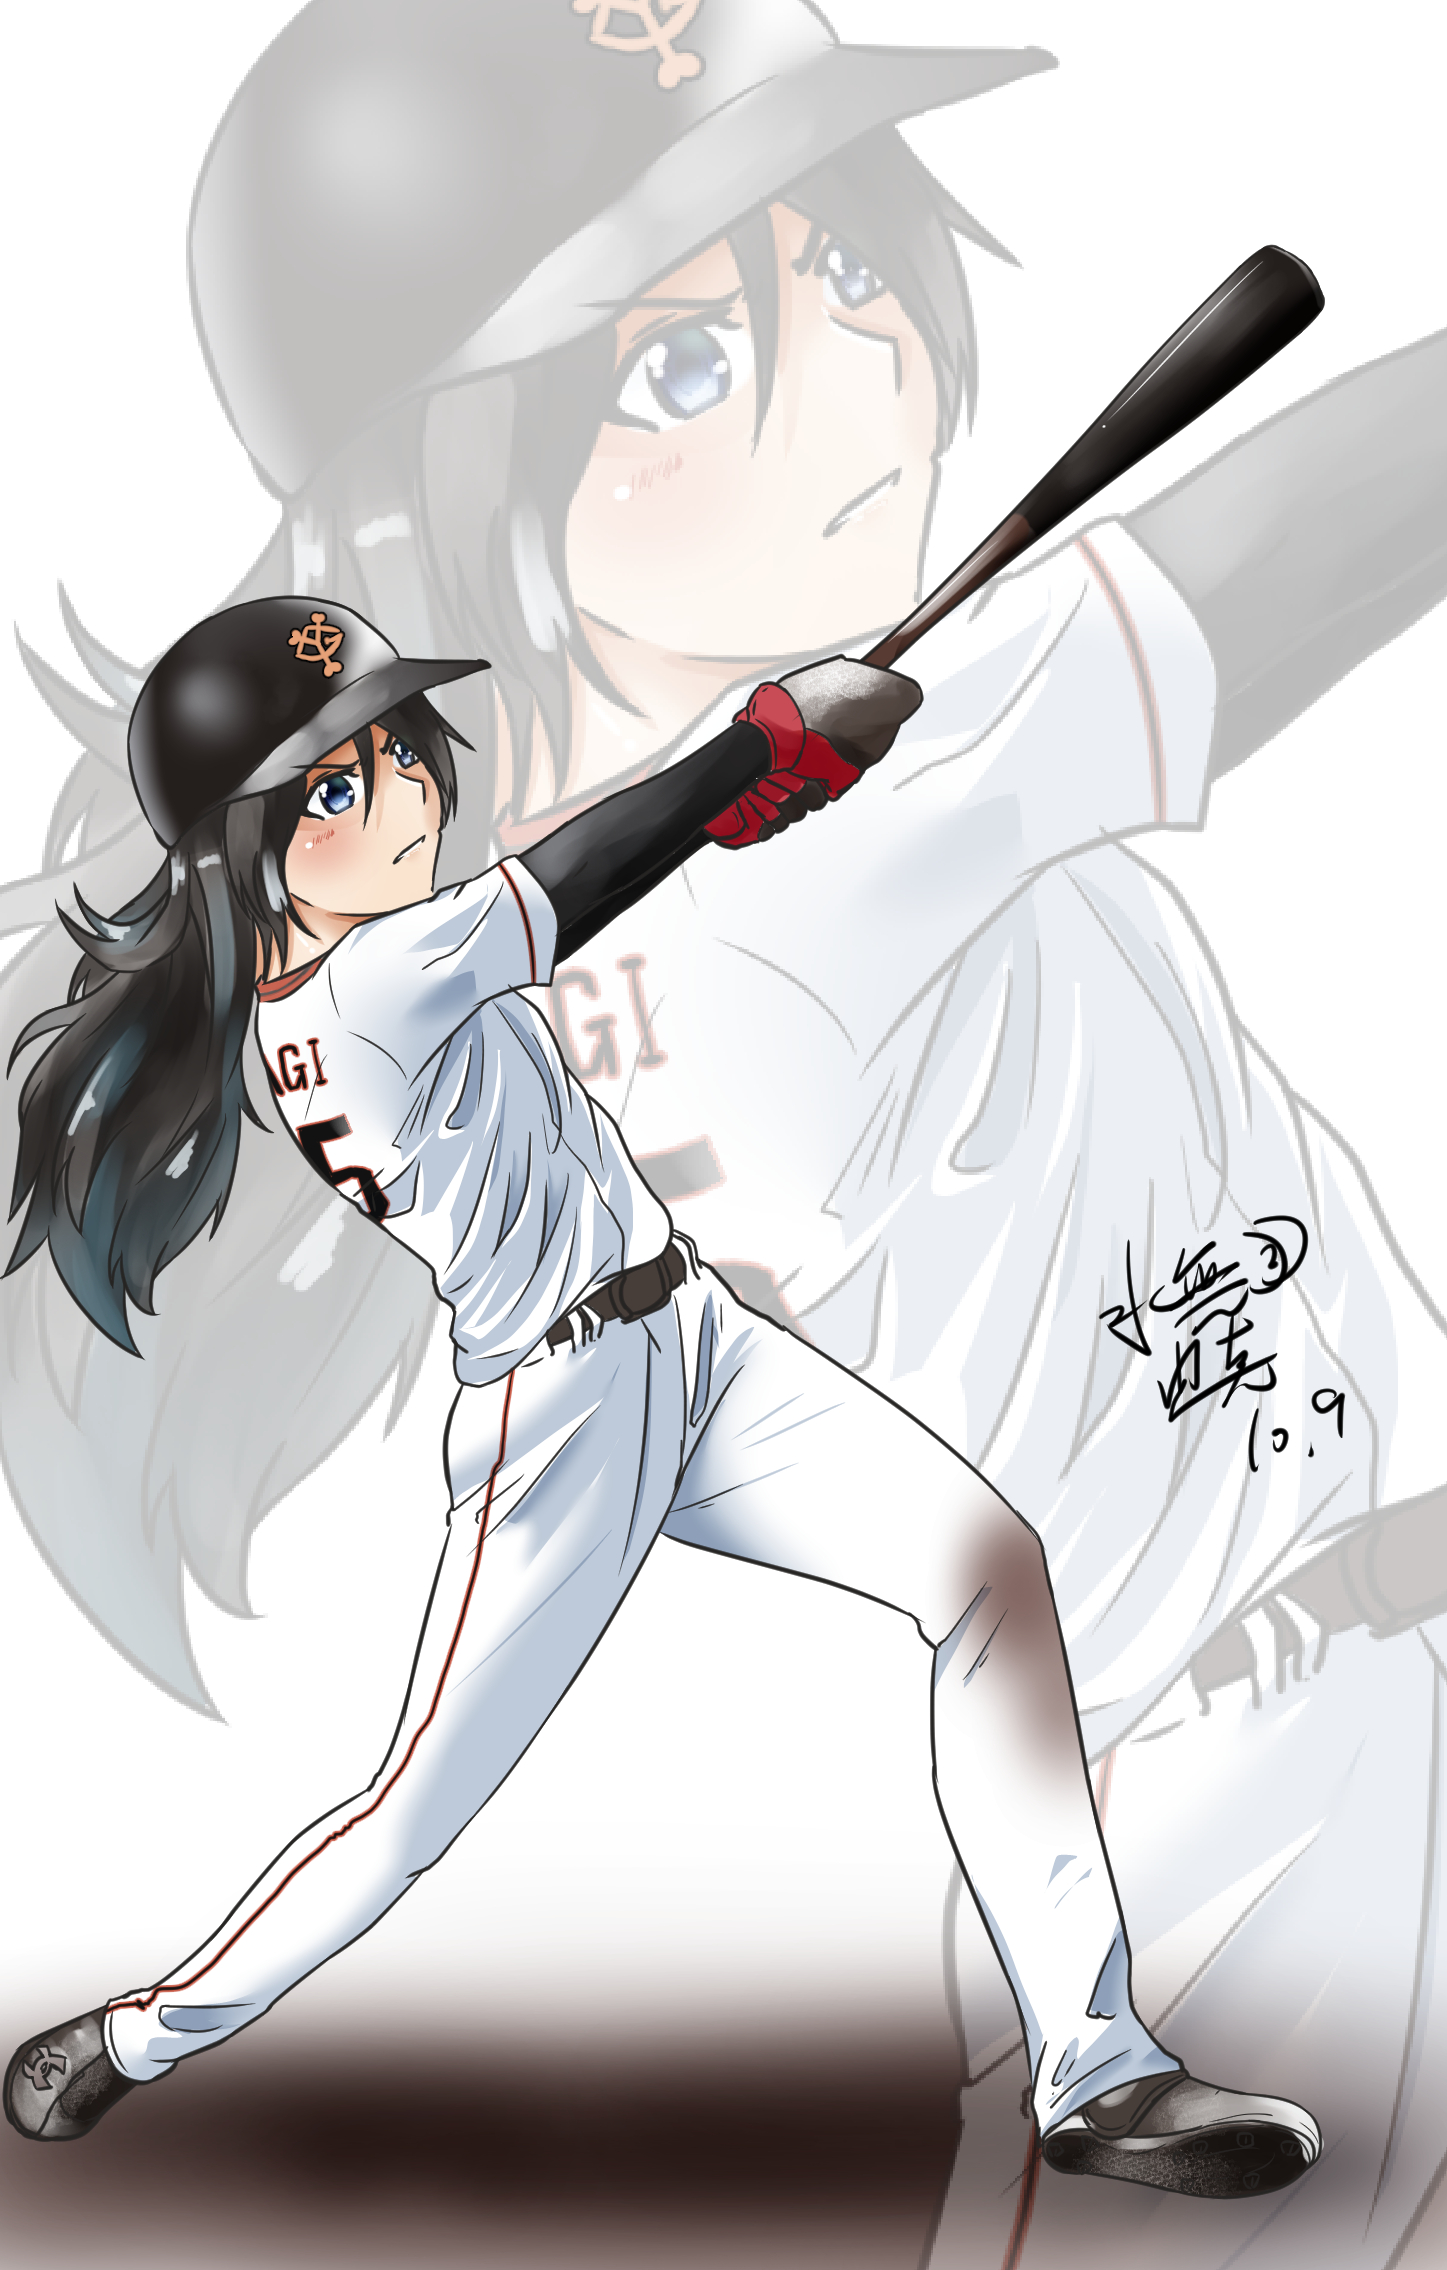 Anime 1447x2270 anime anime girls Kantai Collection Katsuragi (Kancolle) long hair dark hair solo artwork digital art fan art baseball bat baseball cap baseball